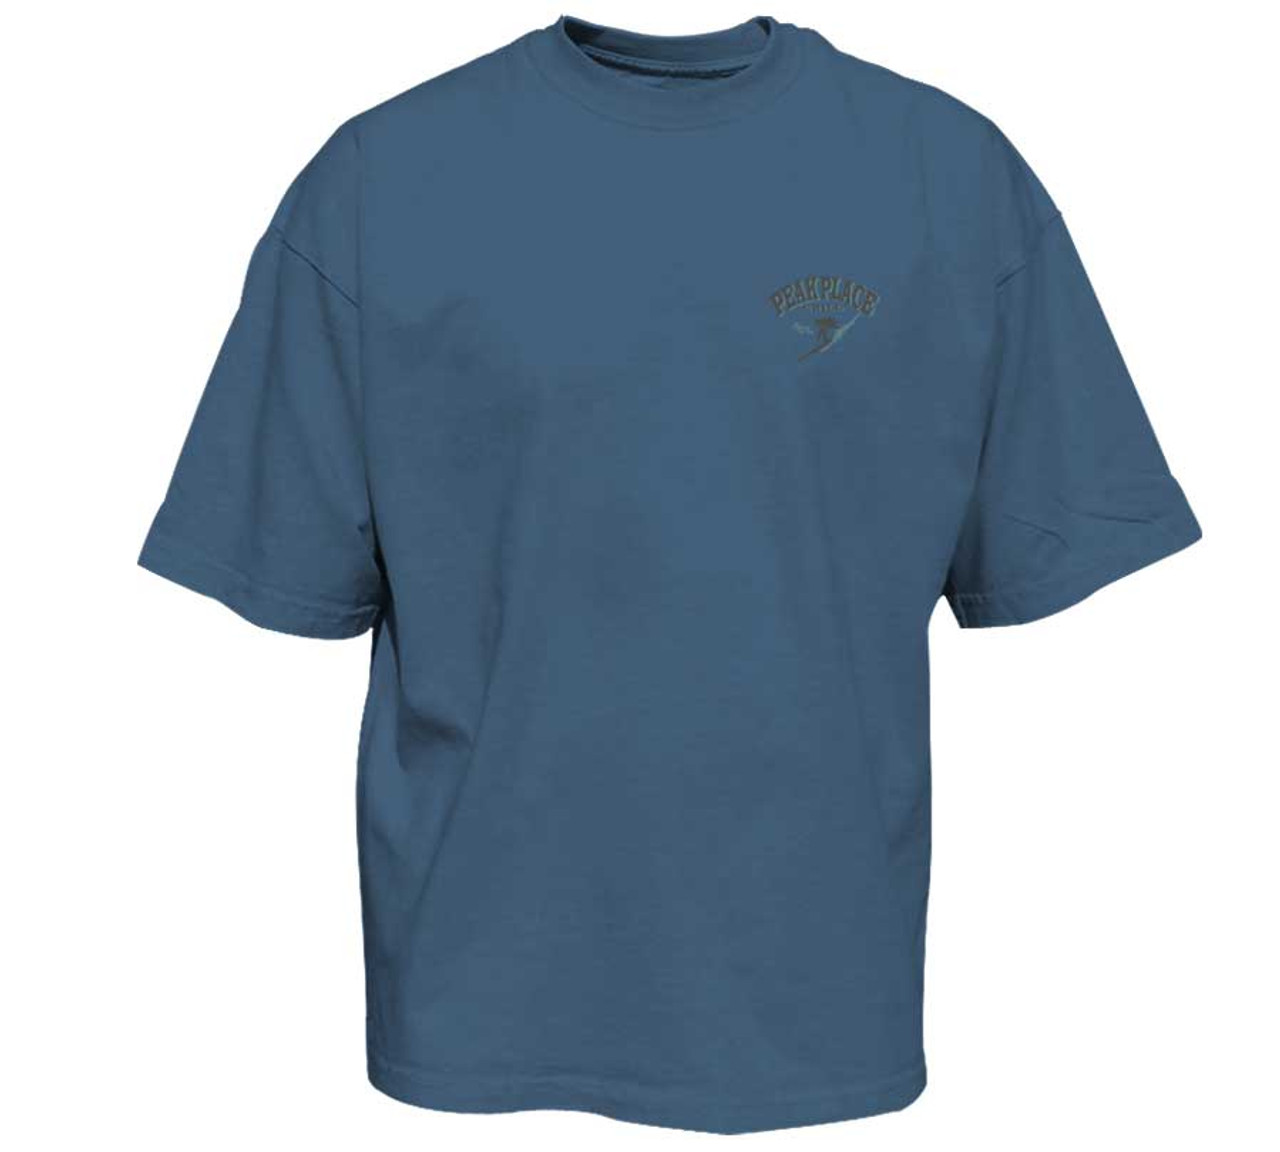 Color: Cobalt - Front of Shirt